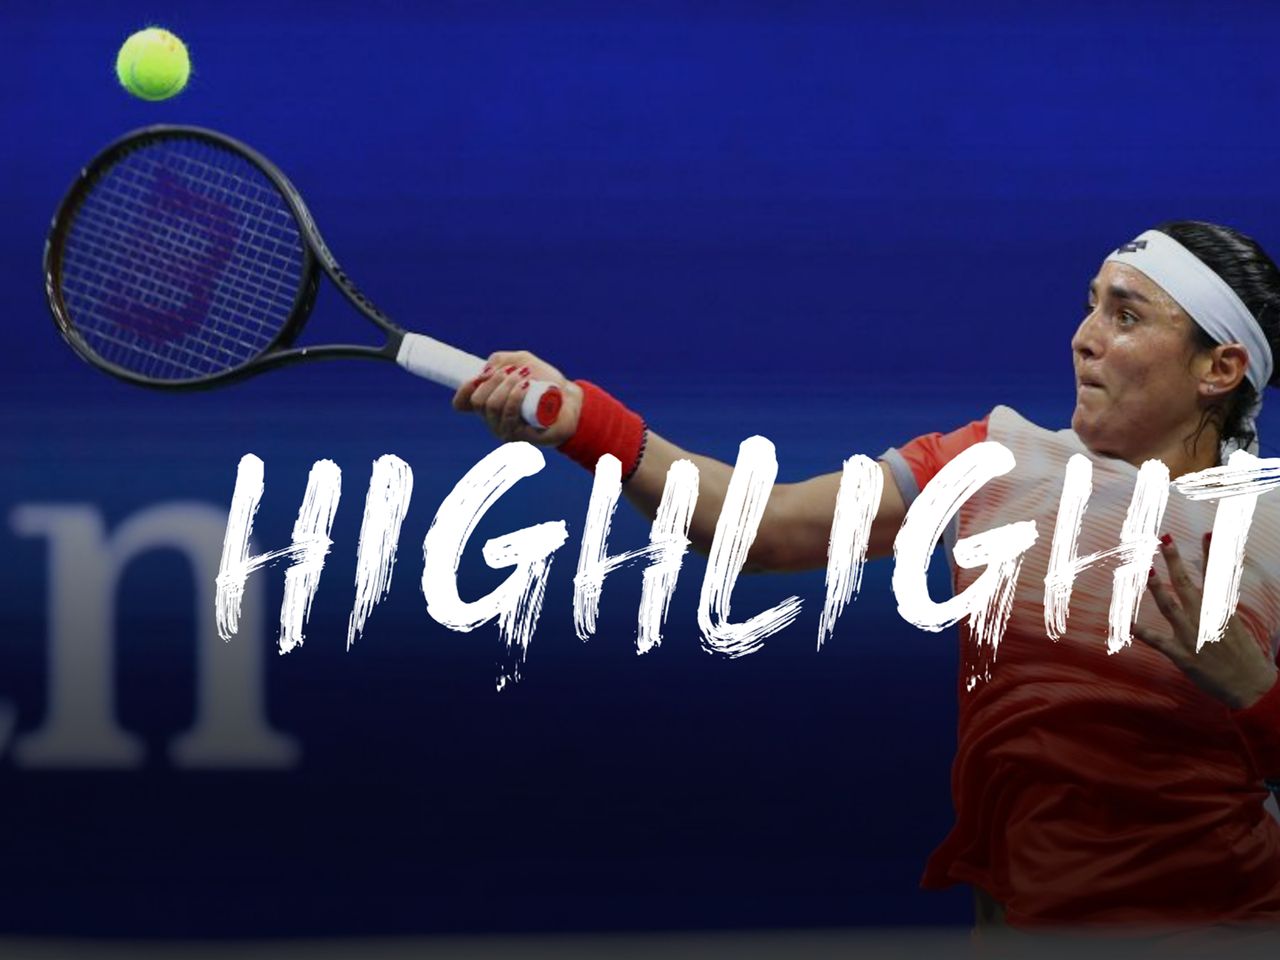 US Open 2022 Ons Jabeur - Caroline Garcia Highlights - Halbfinale Damen-Einzel - Tennis Video